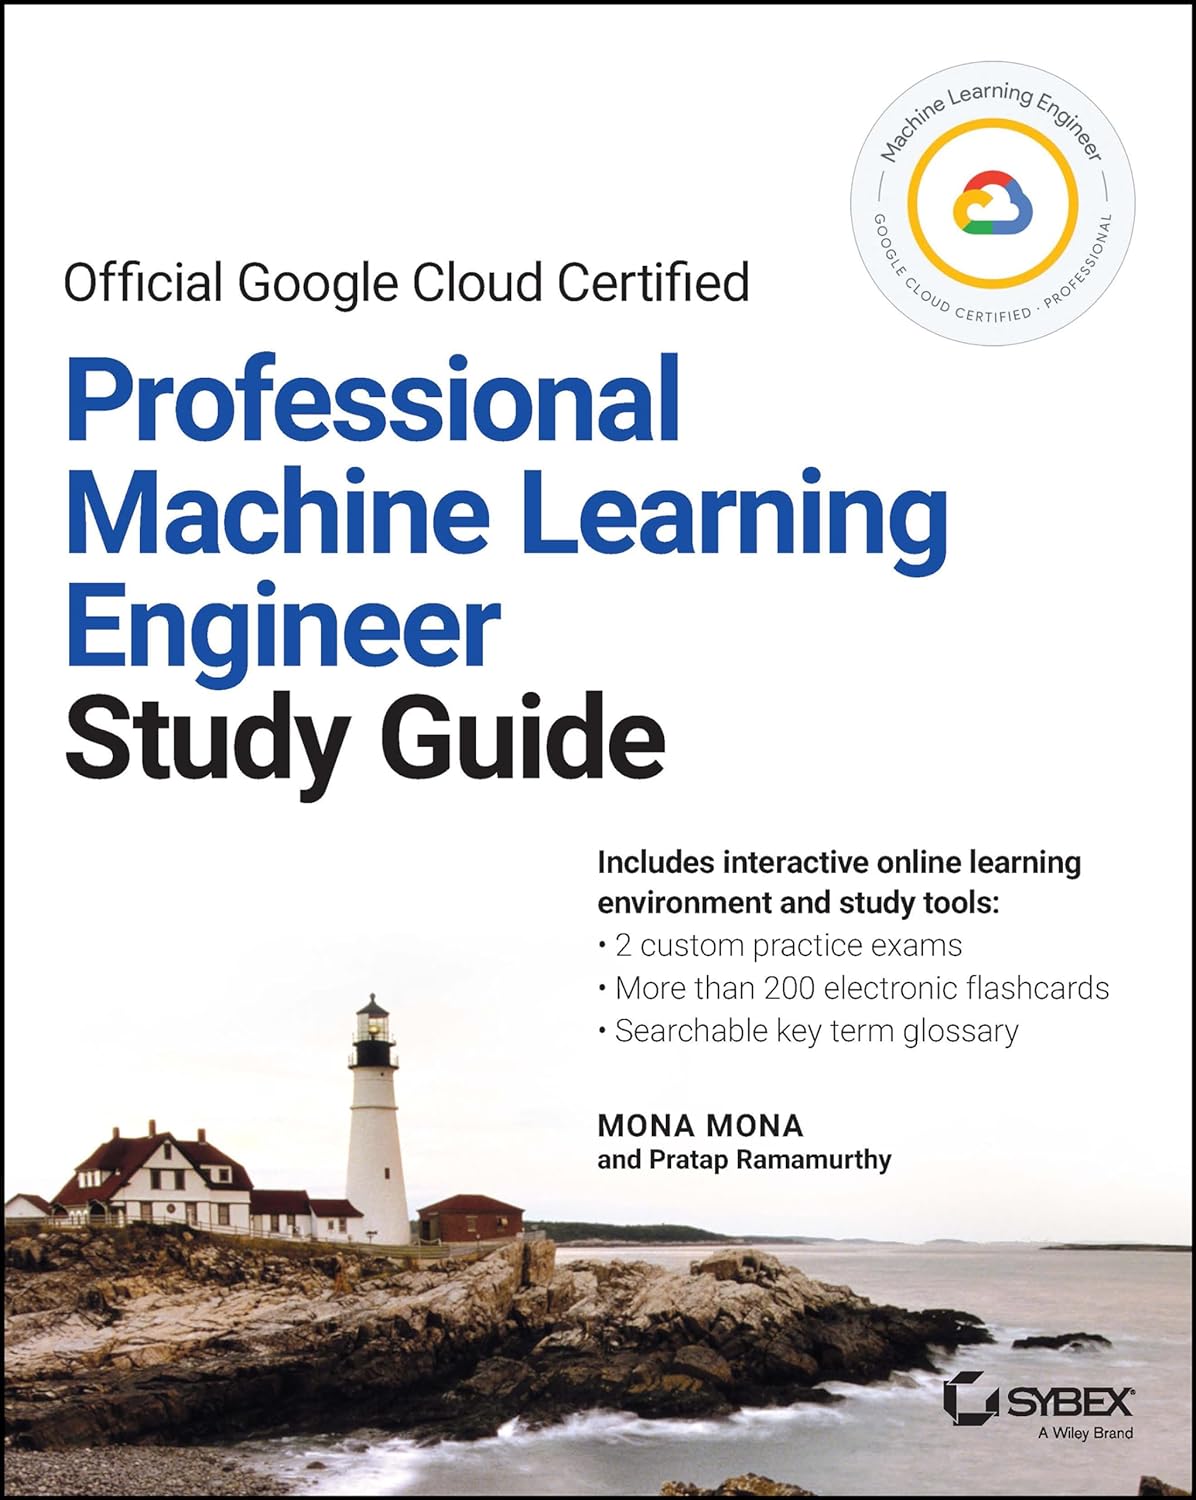 (EBook PDF)Official Google Cloud Certified Professional Machine Learning Engineer Study Guide by Mona Mona, Pratap Ramamurthy